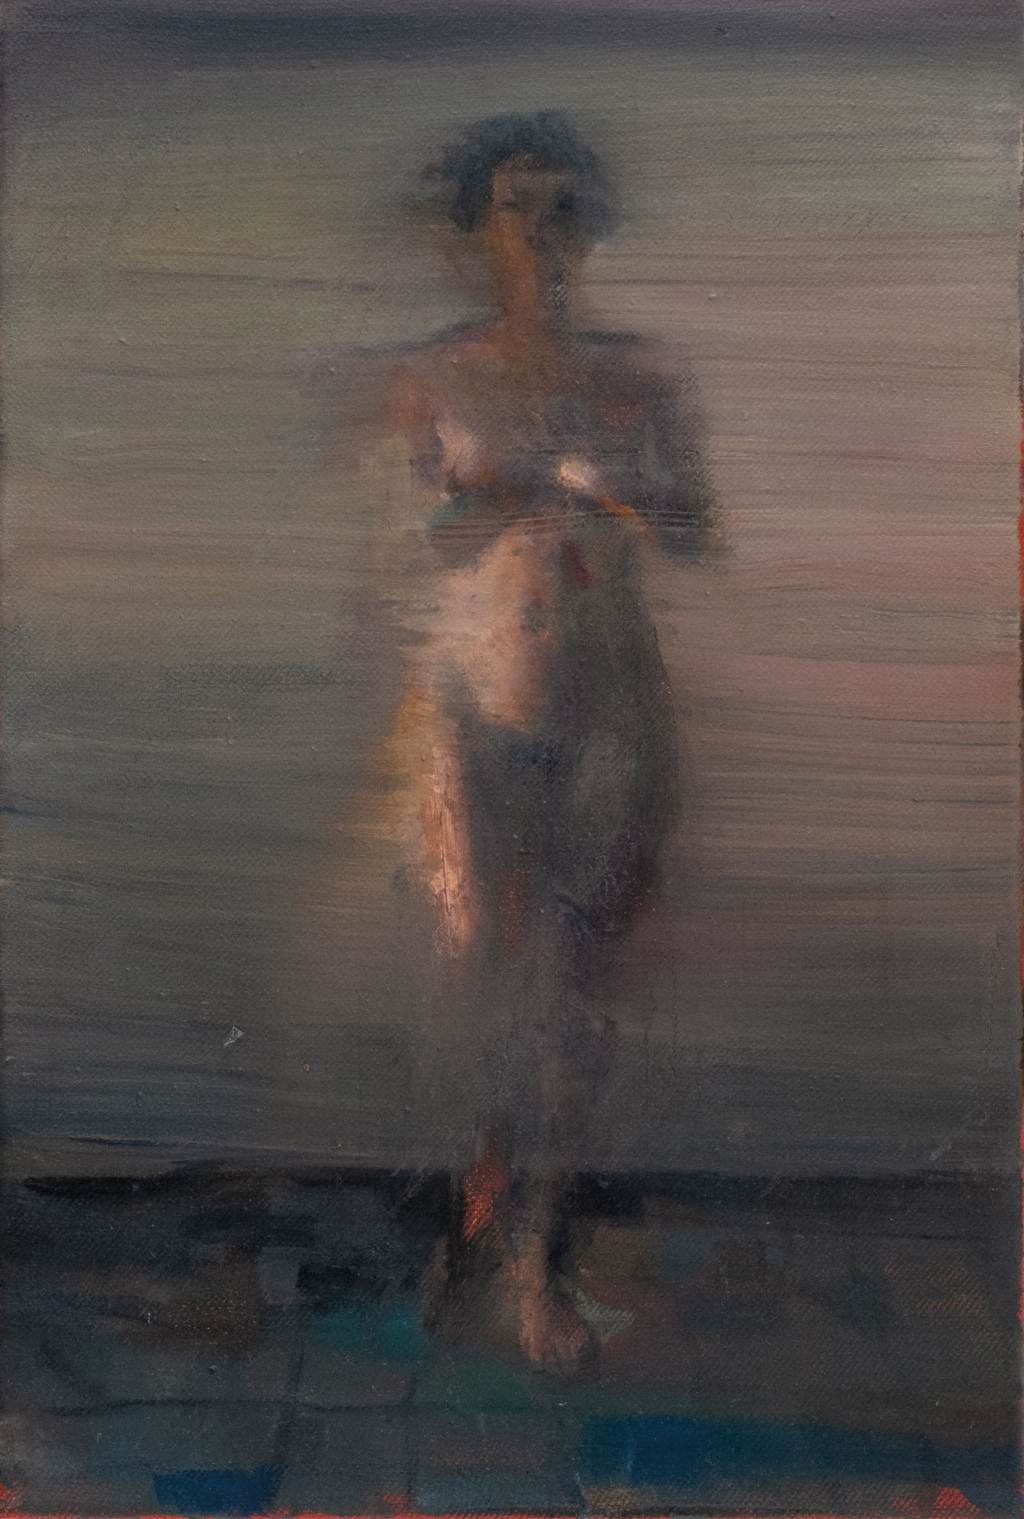 Andrea Muheim, Karunesh coming home, 2019
Oil on canvas
45 x 30 cm